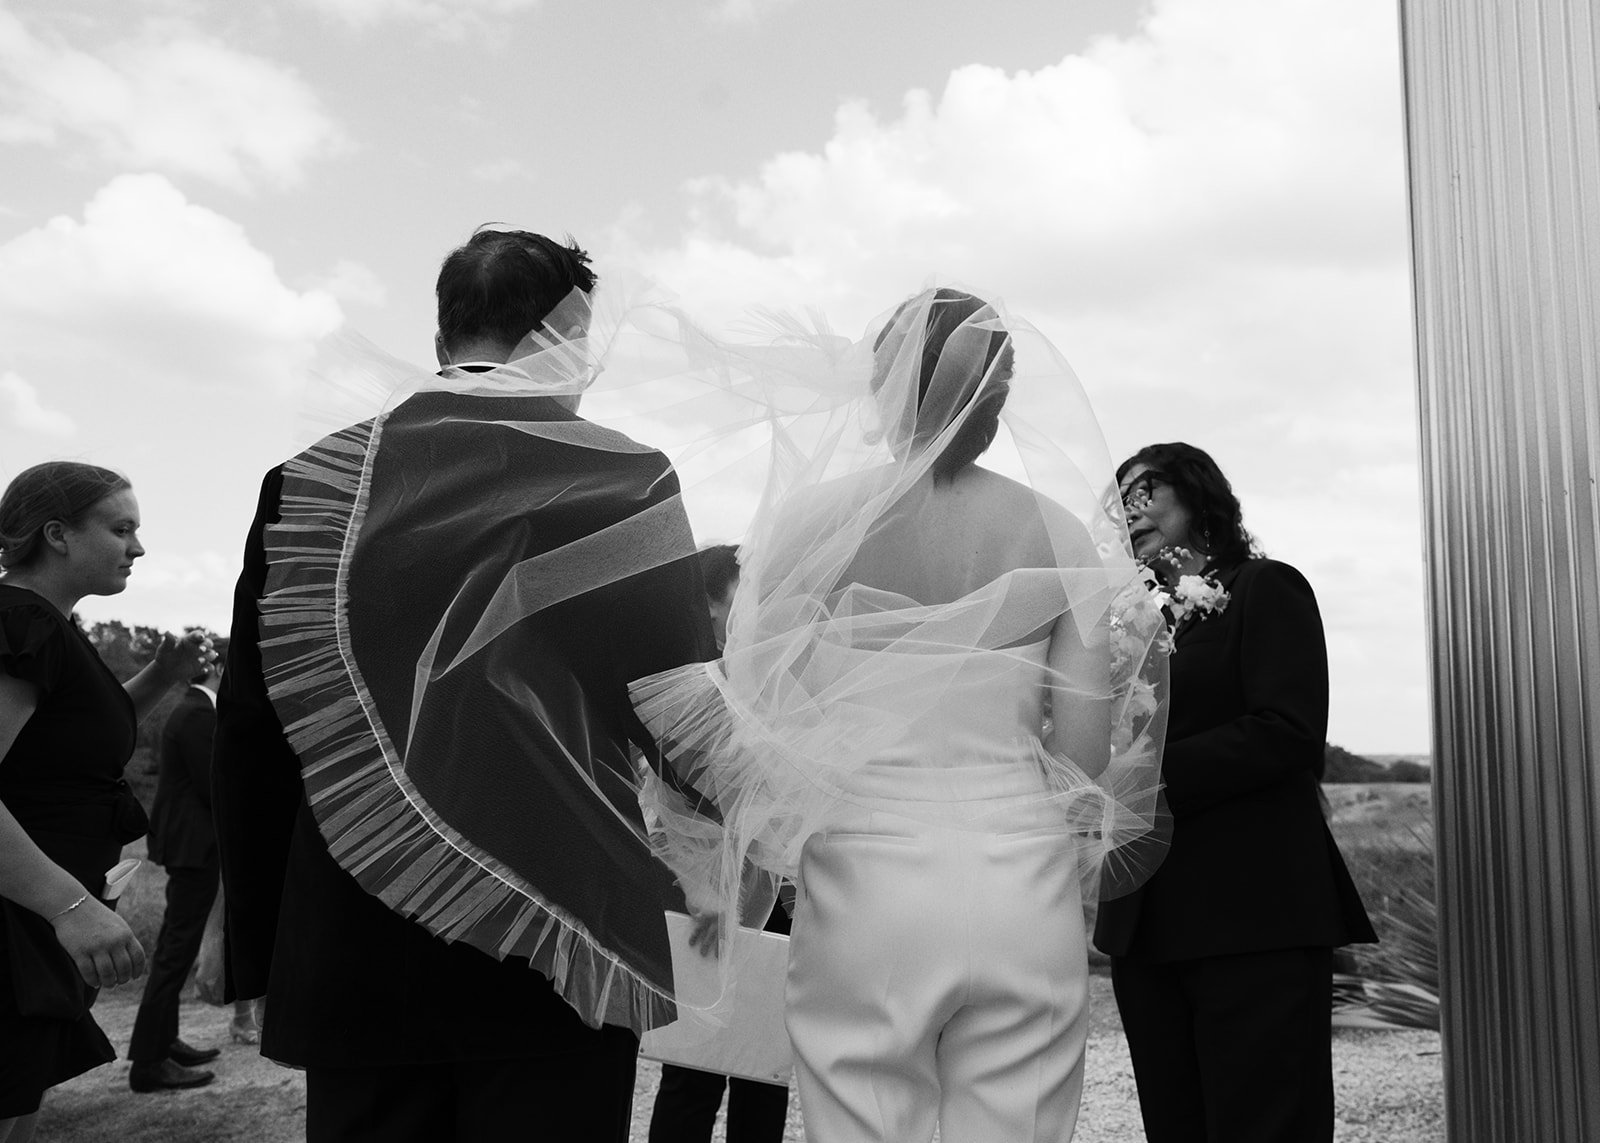 Best-Austin-Candid-Wedding-Photographers-Film-Documentary-35mm-Prospect-House-58.jpg